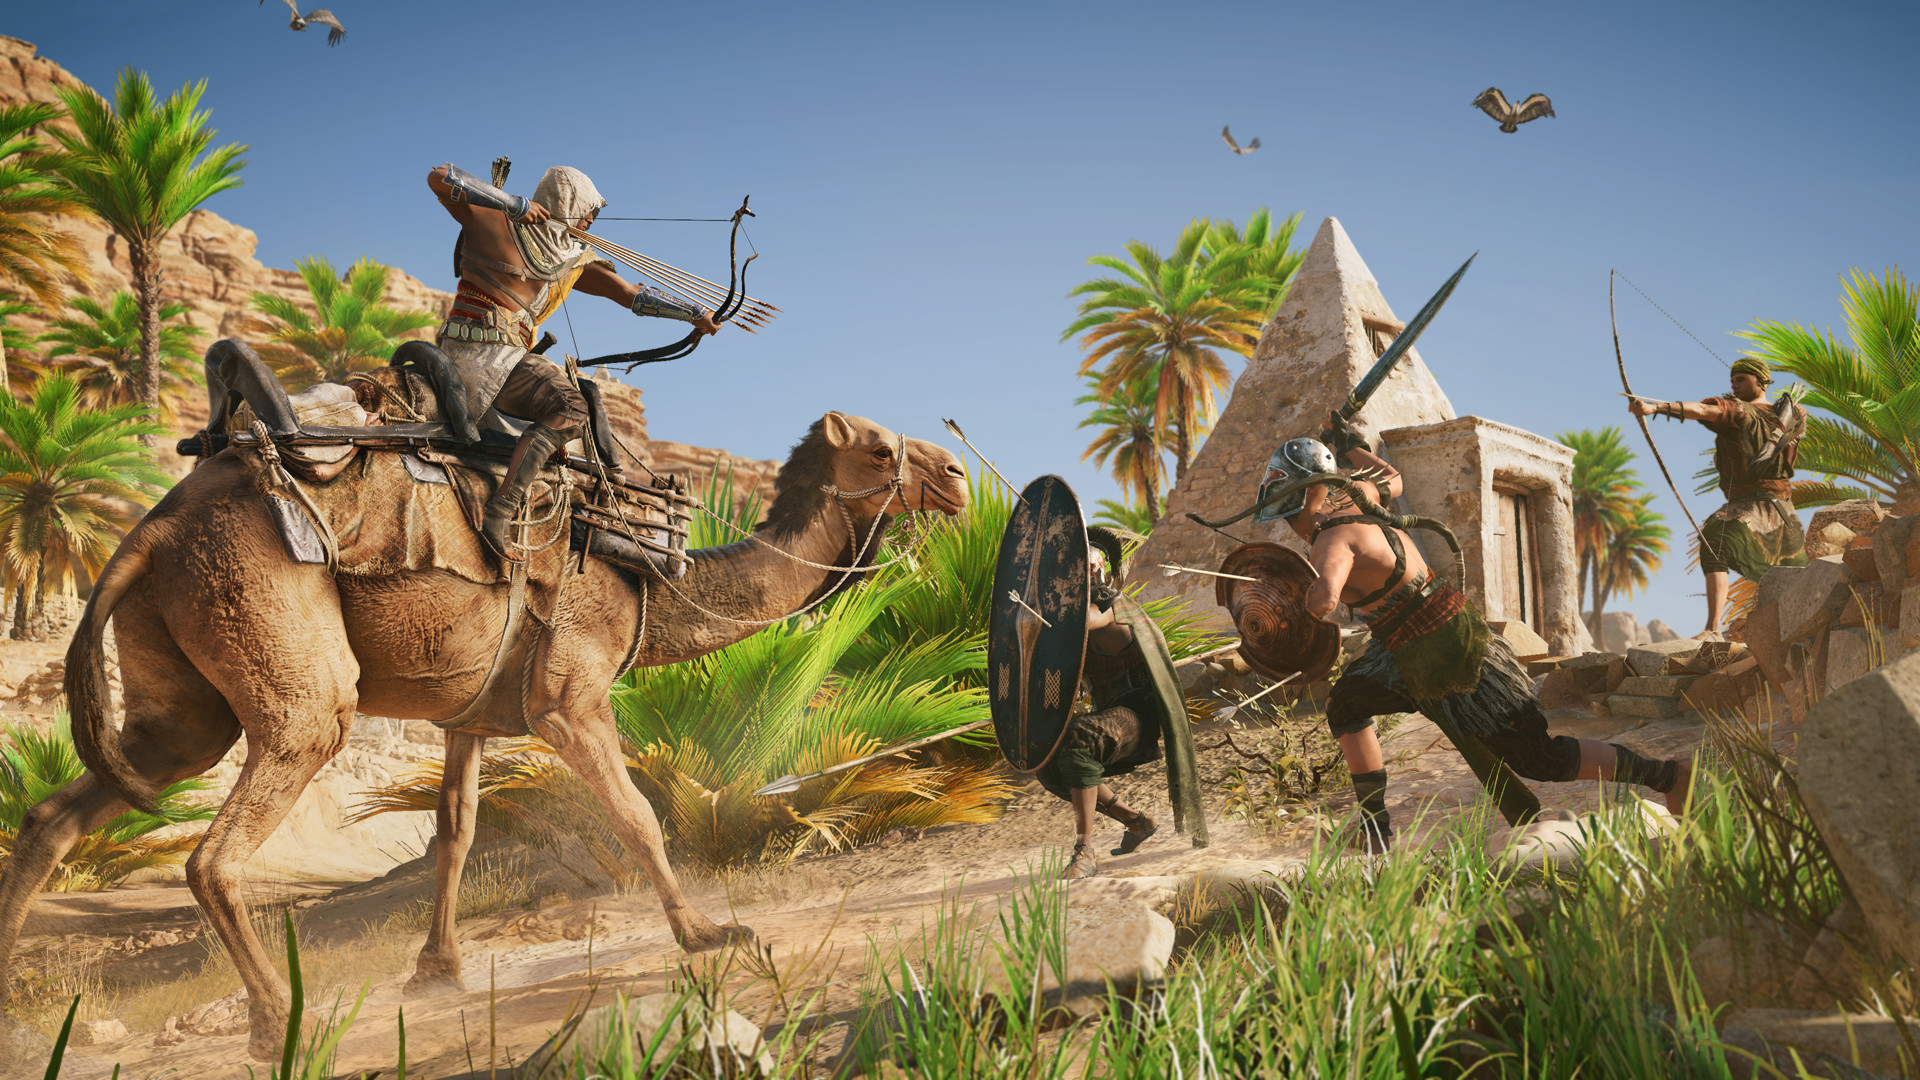 Rynke panden Perth Berygtet Assassin's Creed® Origins on Steam